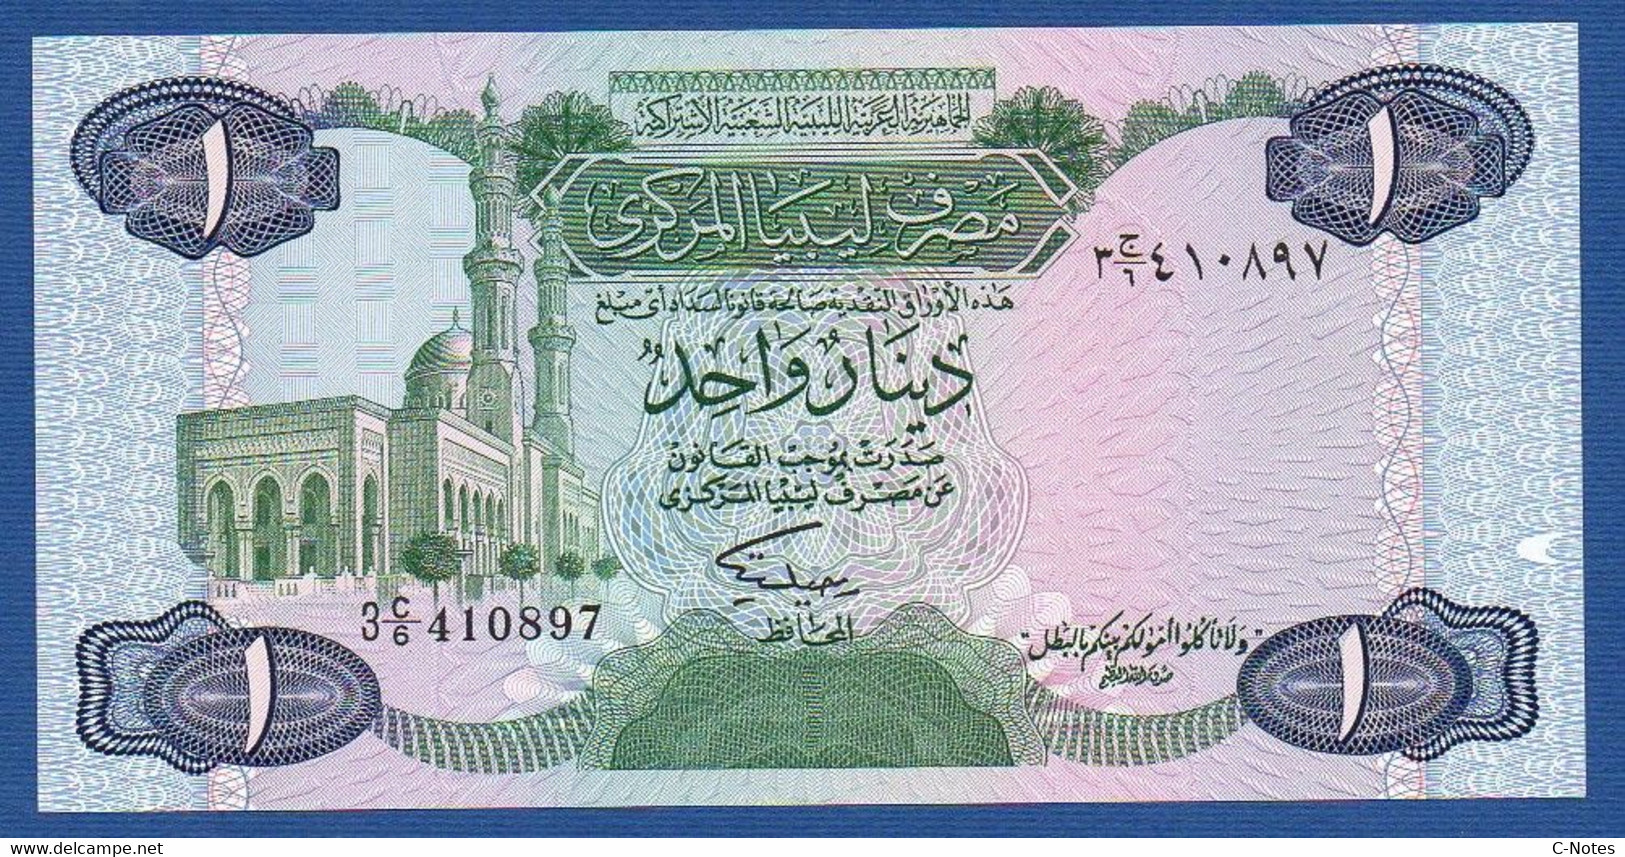 LIBYA - P.49 – 1 Dinar ND (1984) UNC-, Serie  3 C/6 410897 - Libya